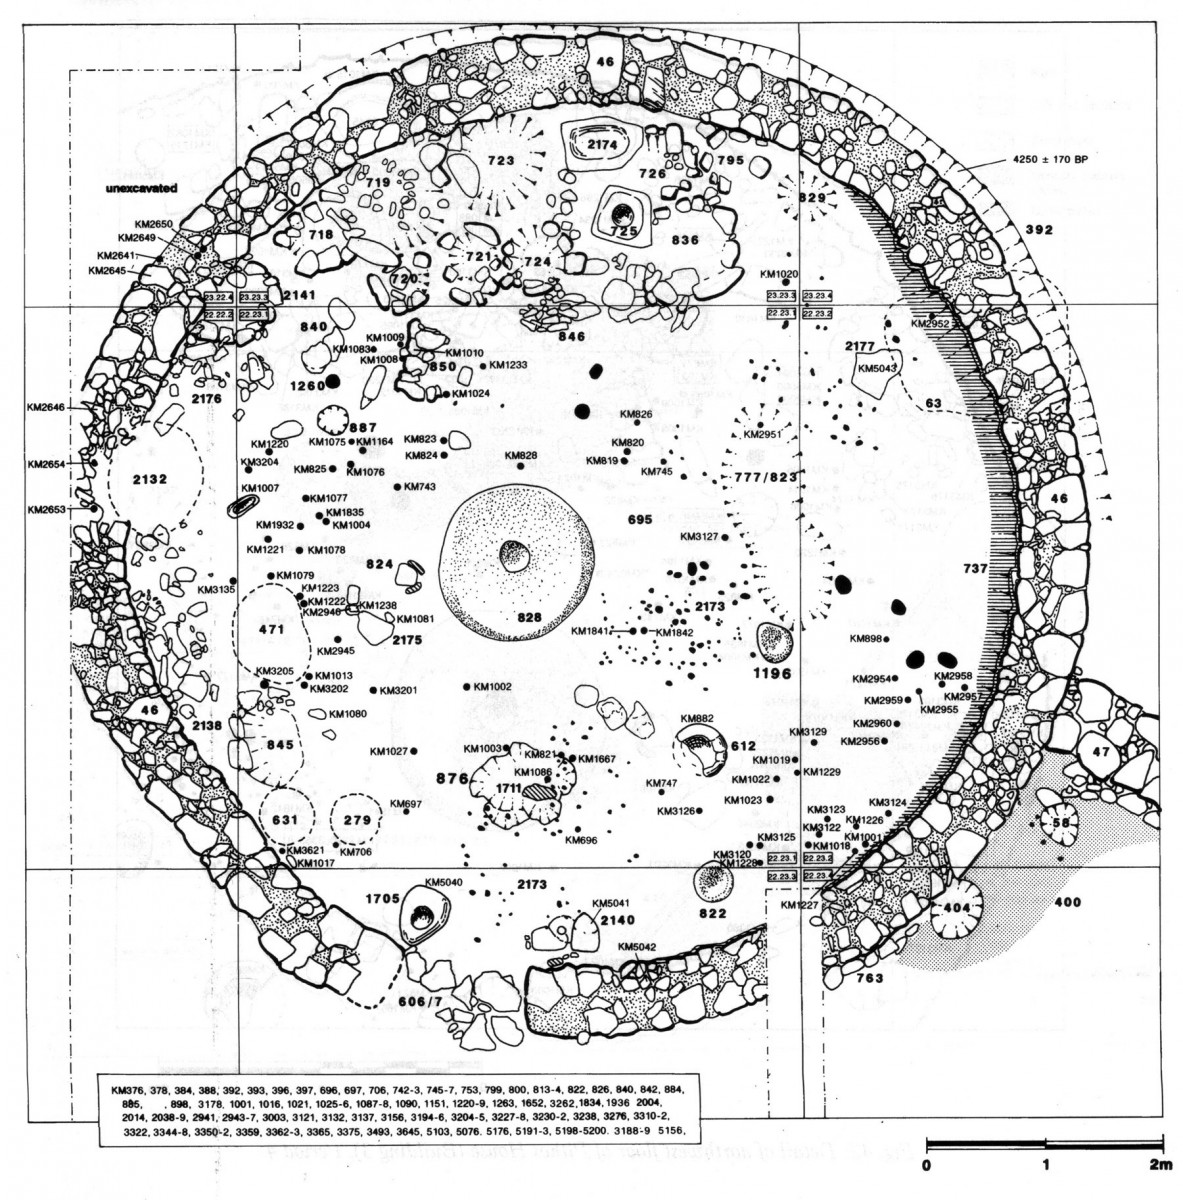 Fig. 3b. Ground plan of building 3.  Kissonerga-Mosfilia, Cyprus (mid 3rd millennium B.C.) (courtesy of E. Peltenburg).